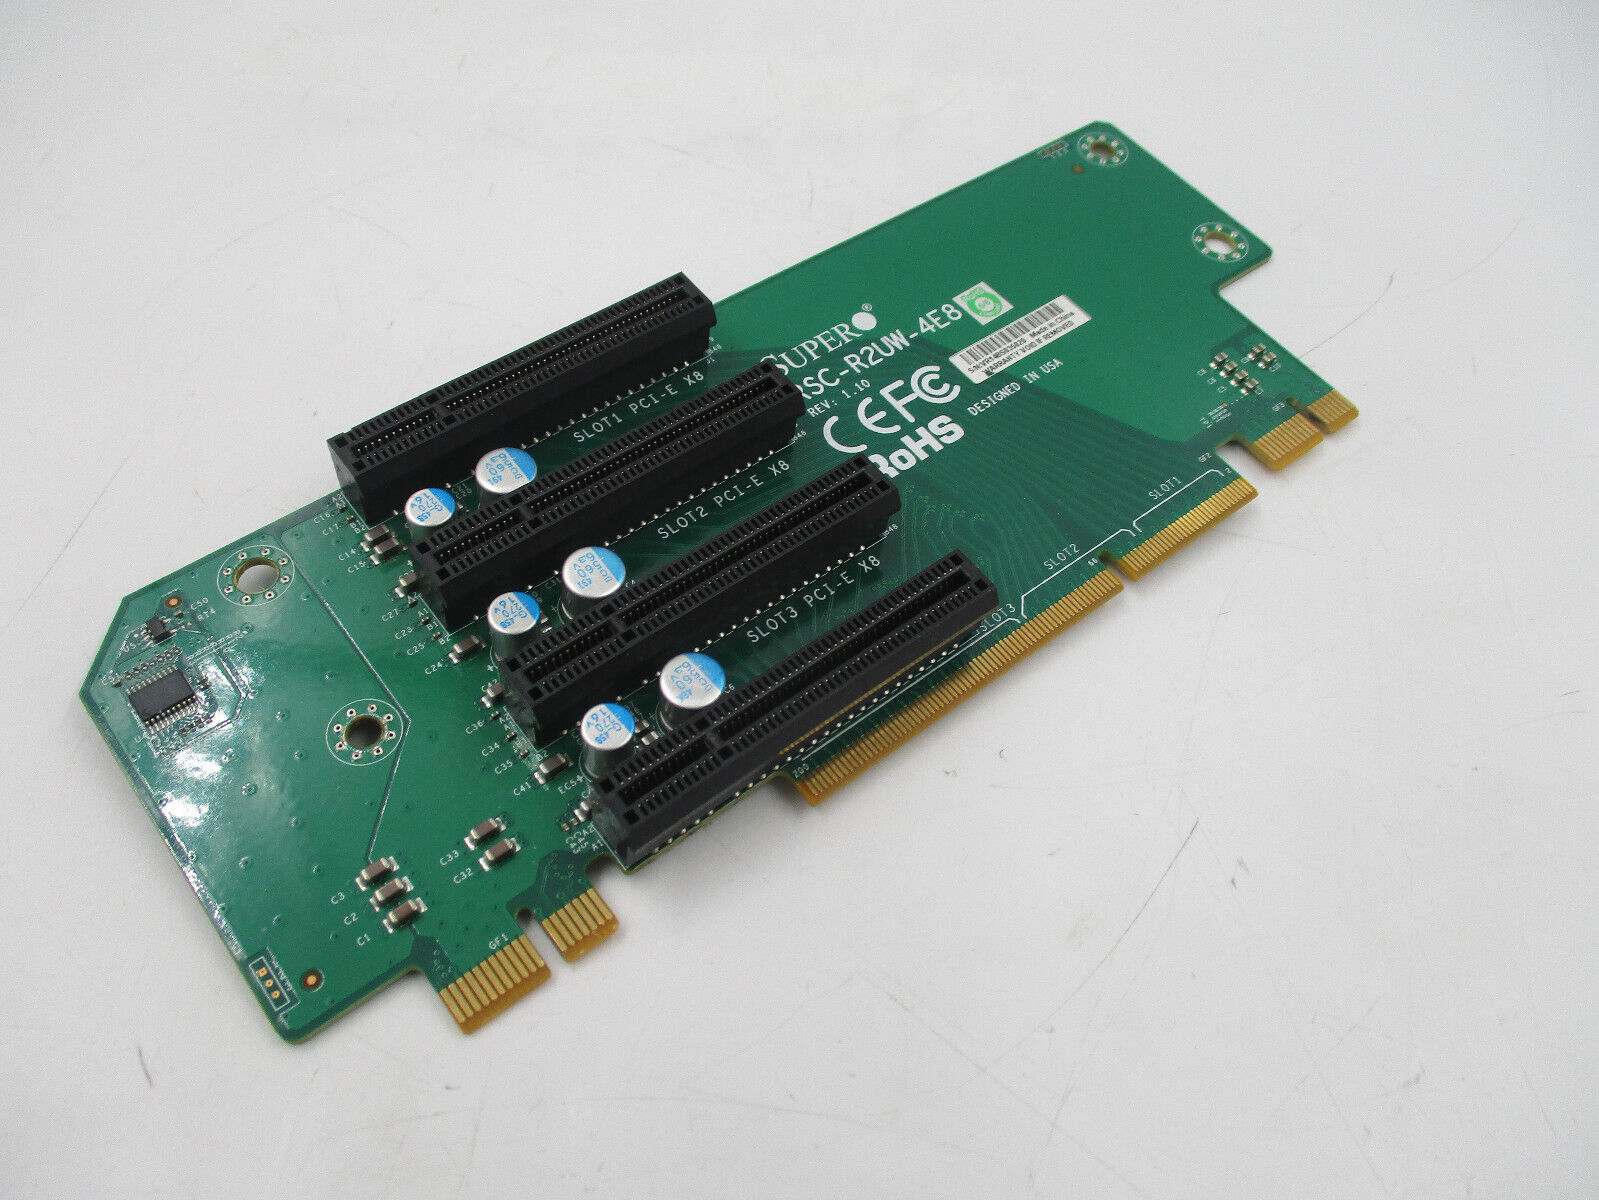 Supermicro RSC-R2UW-4E8 4x PCI-Express x8 Slots Riser Card Tested Working